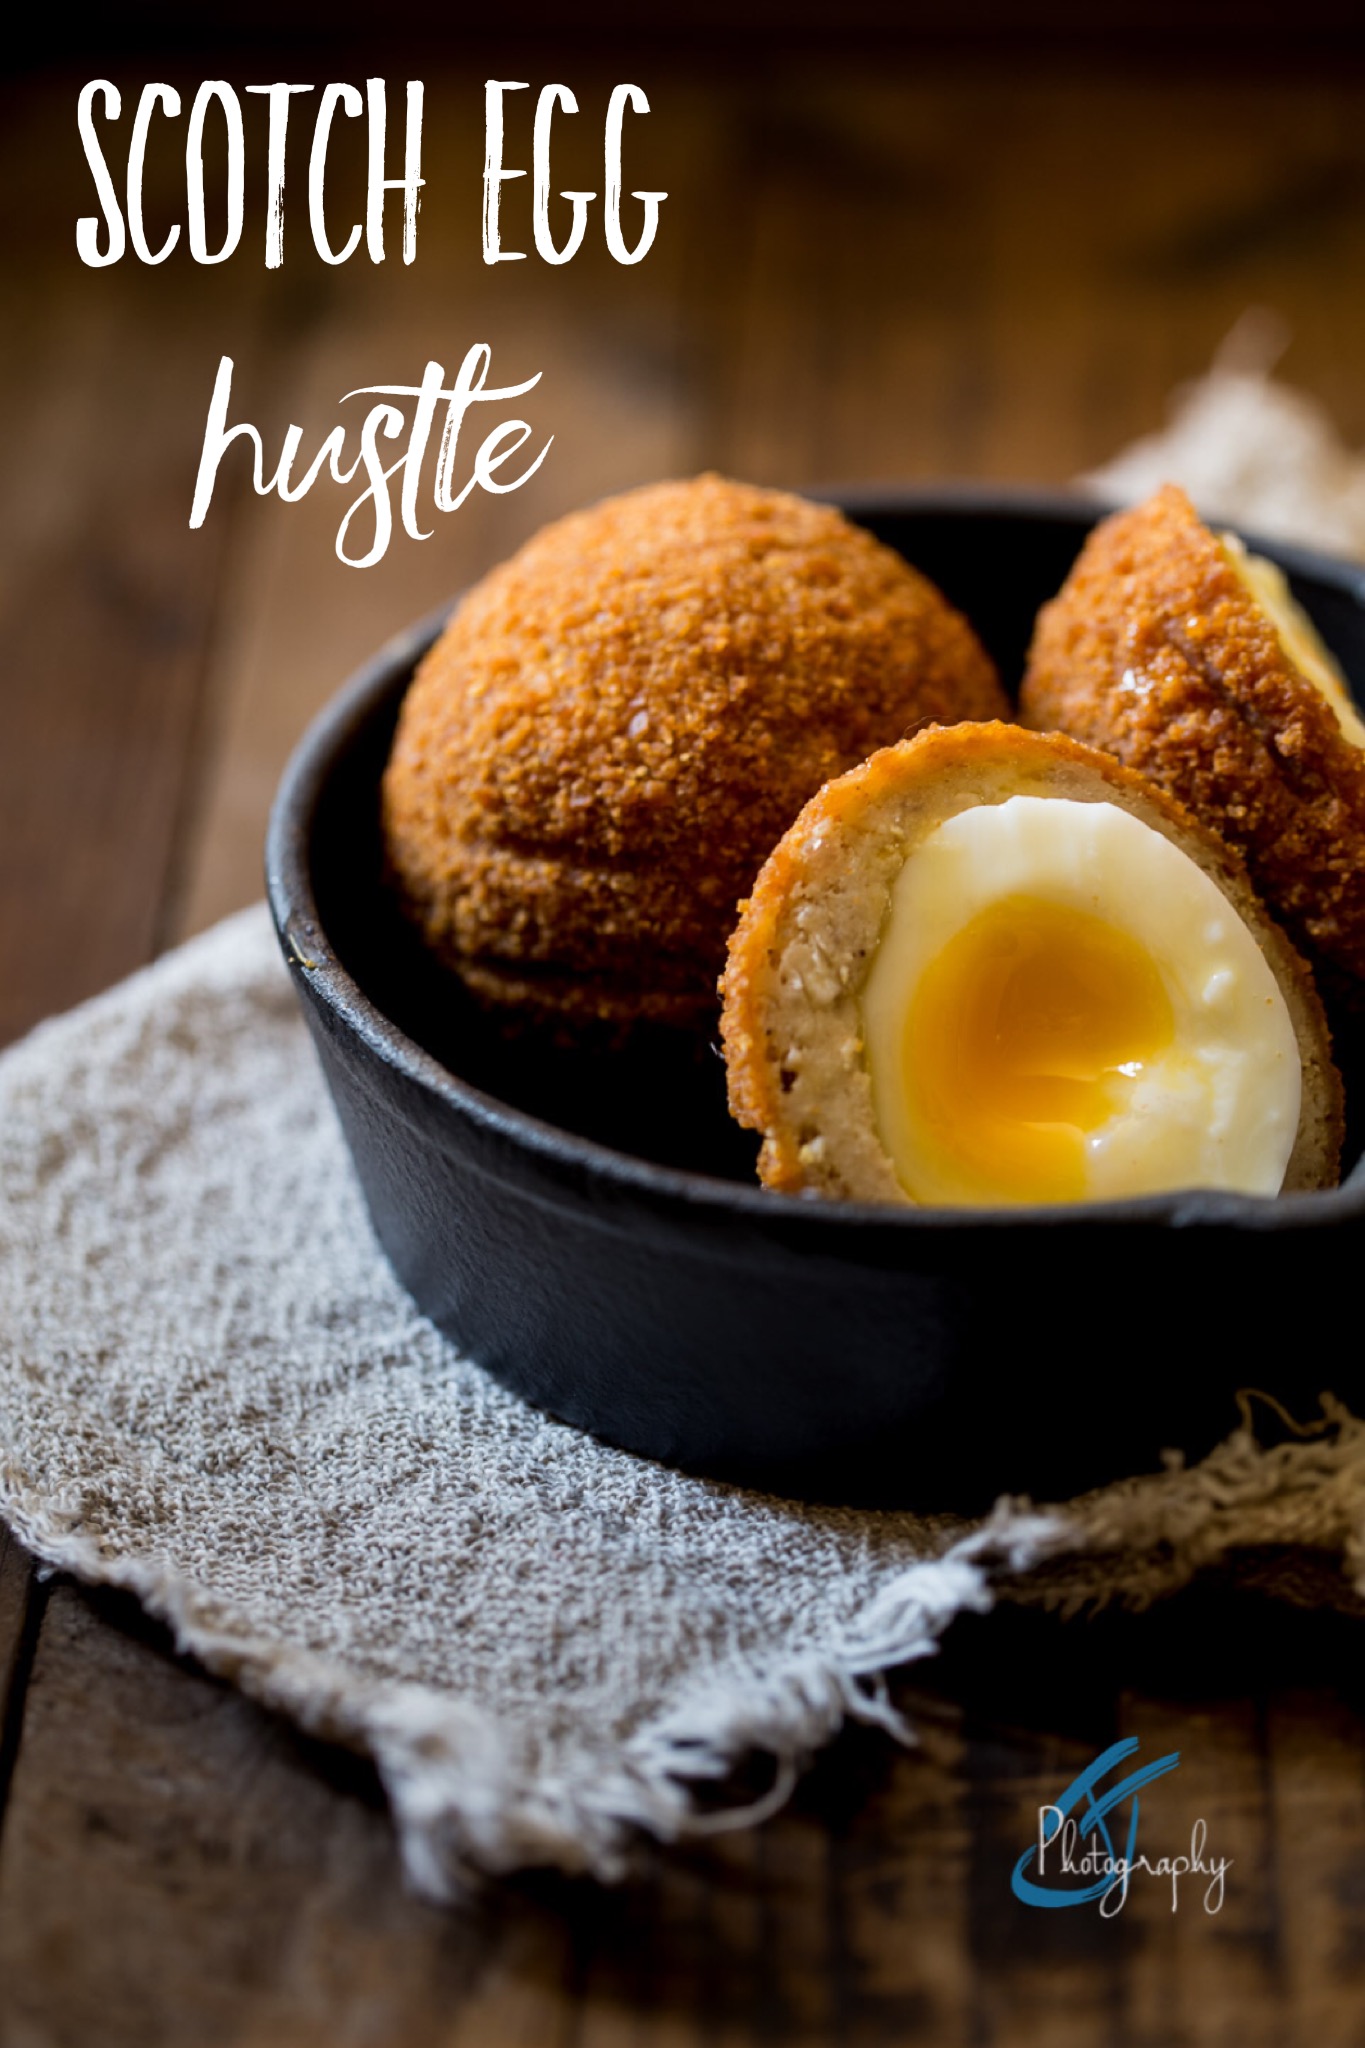 Scotch Egg Hustle| www.jonathanthompsonphotogrphy.com